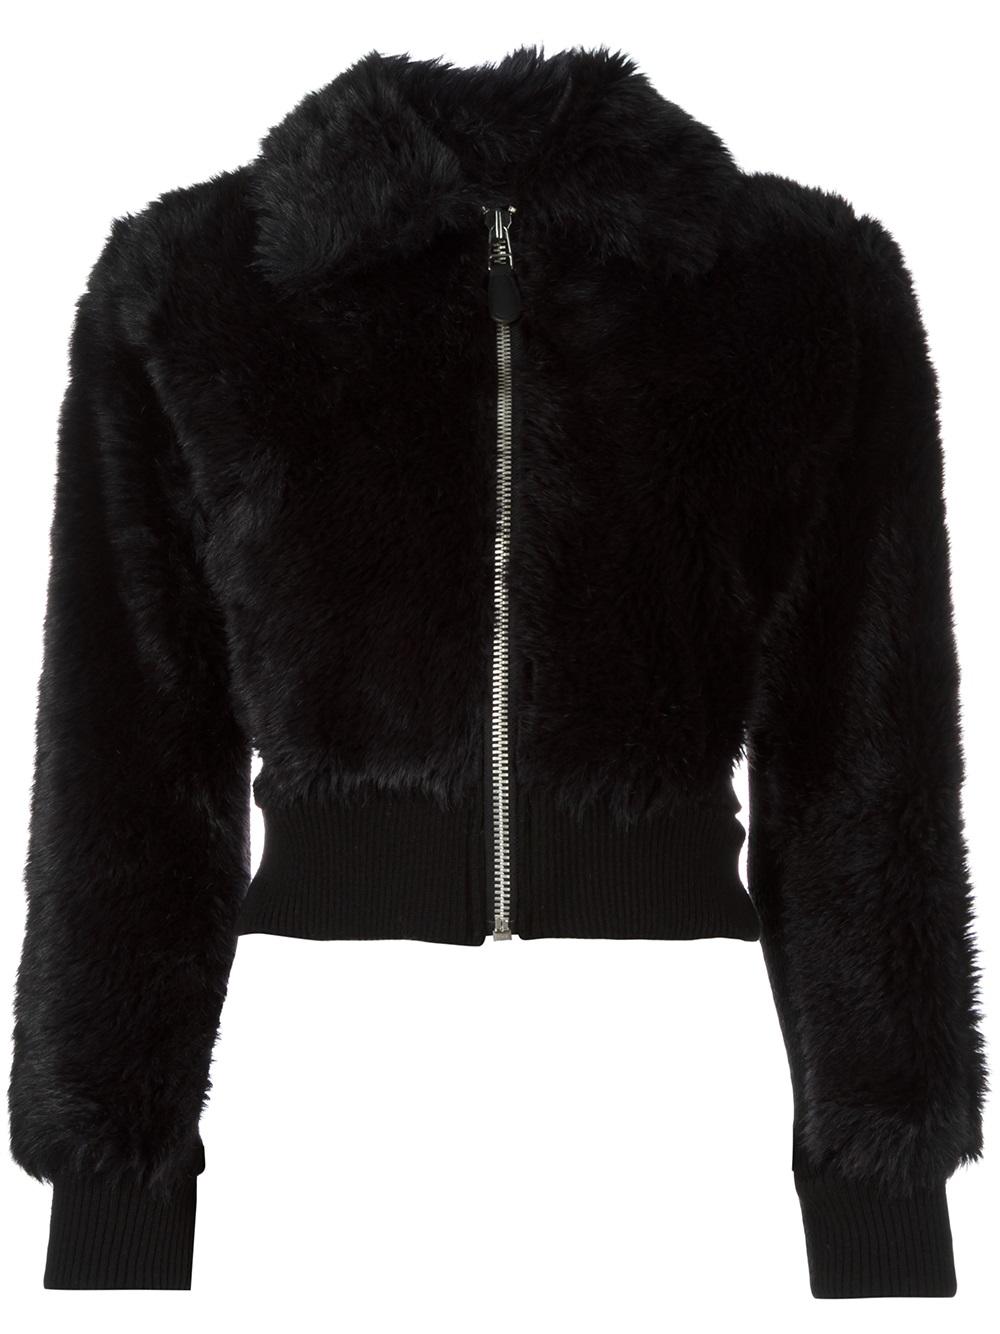 Copy Bella Hadid’s Black Fur Coat And Skinny Denim | FASHION